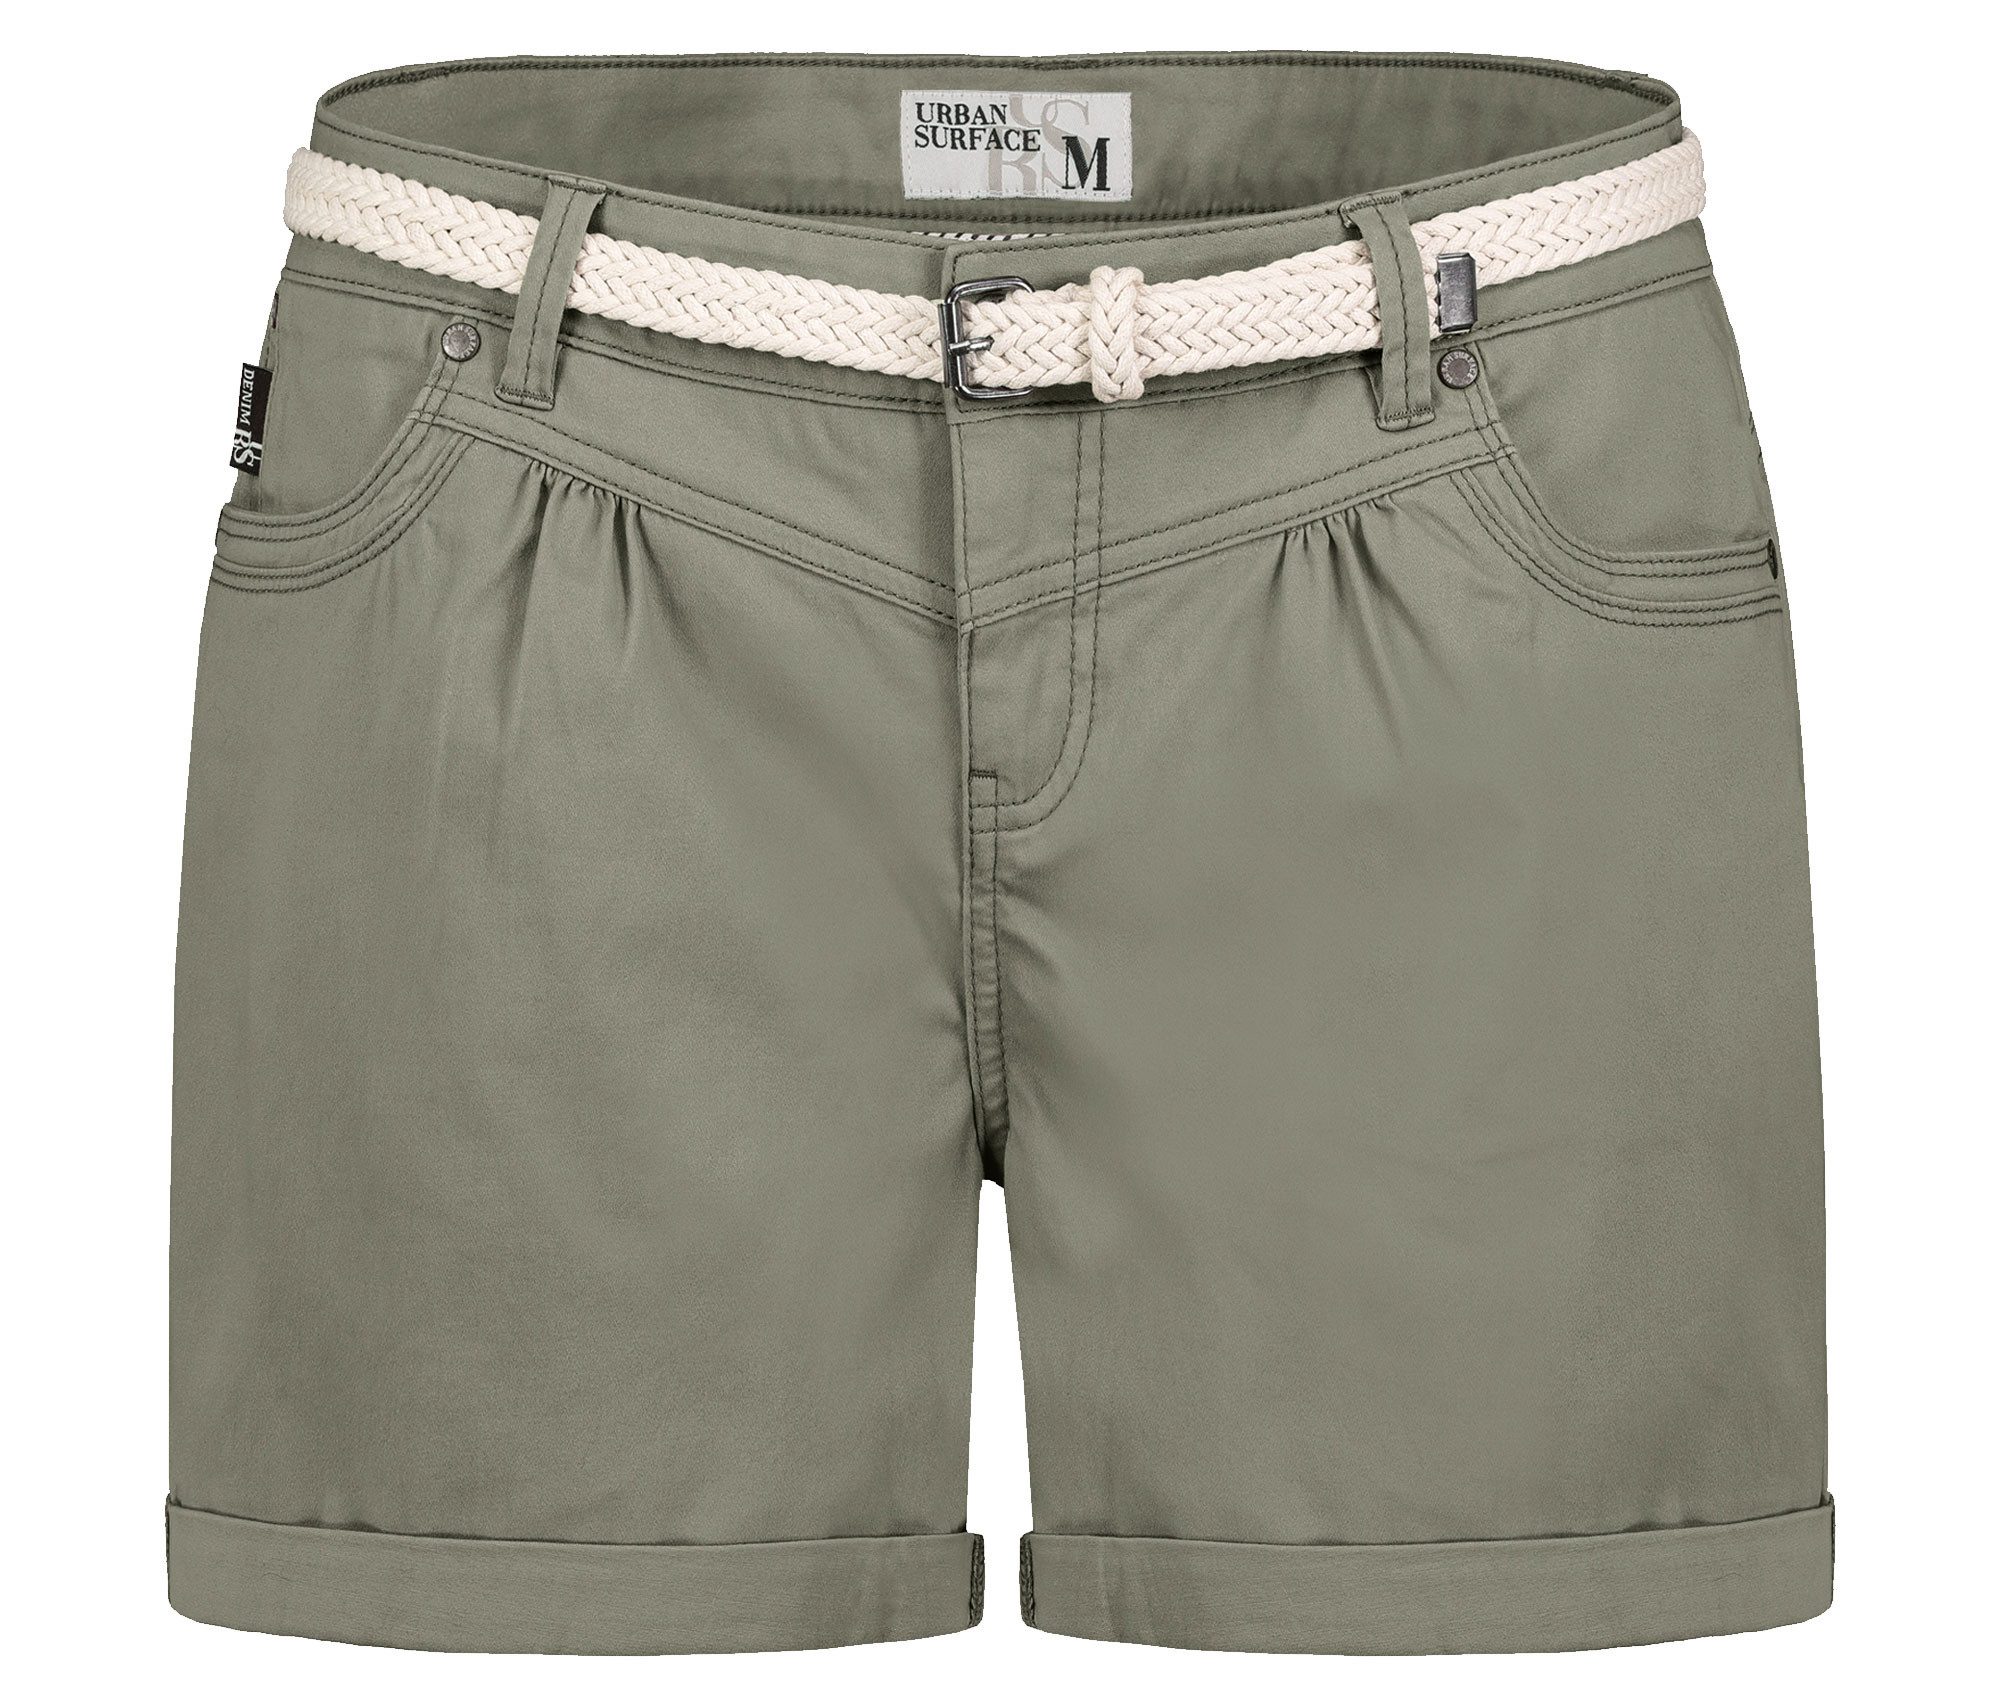 SUBLEVEL Shorts Damen Bermudas kurze Hose Baumwolle Hotpants Chino Sommer Hose